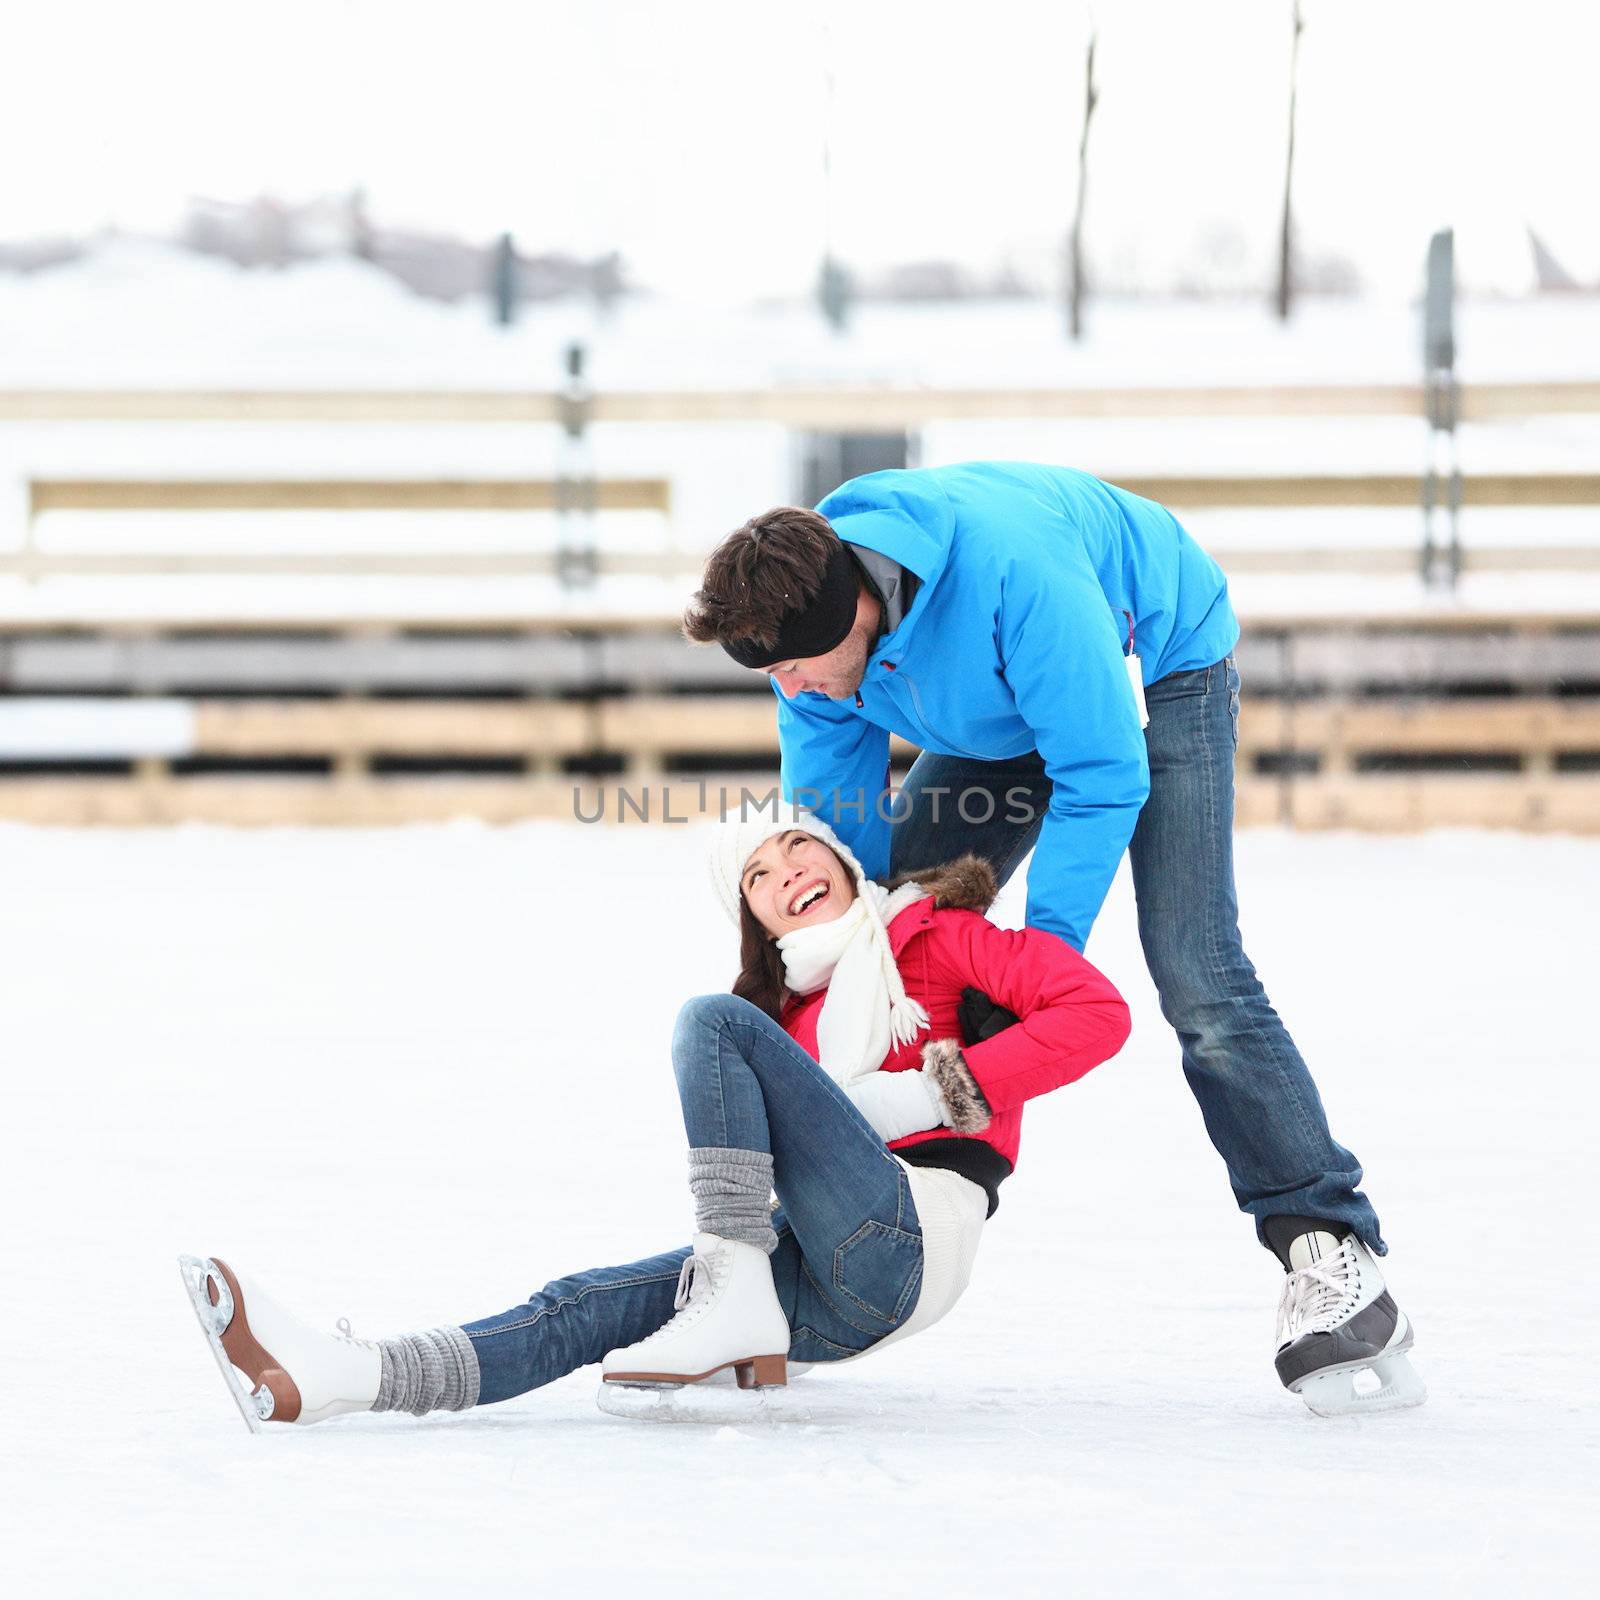 ice skating couple winter fun by Maridav